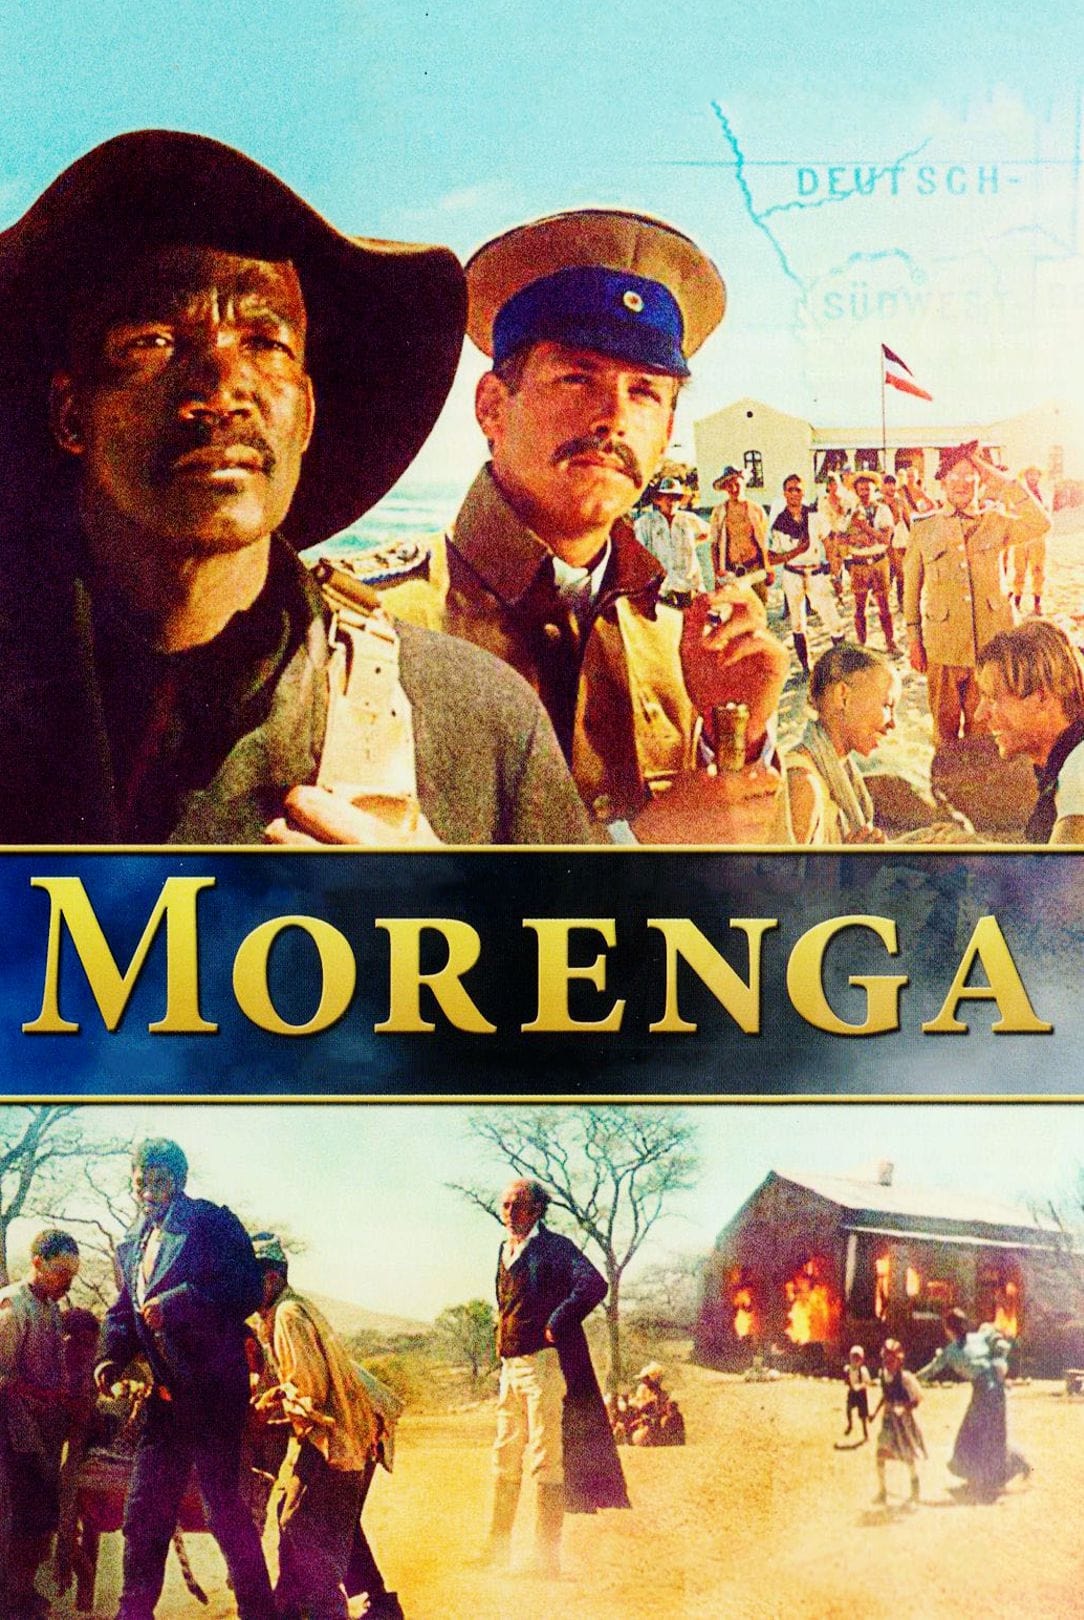 Morenga (1985)